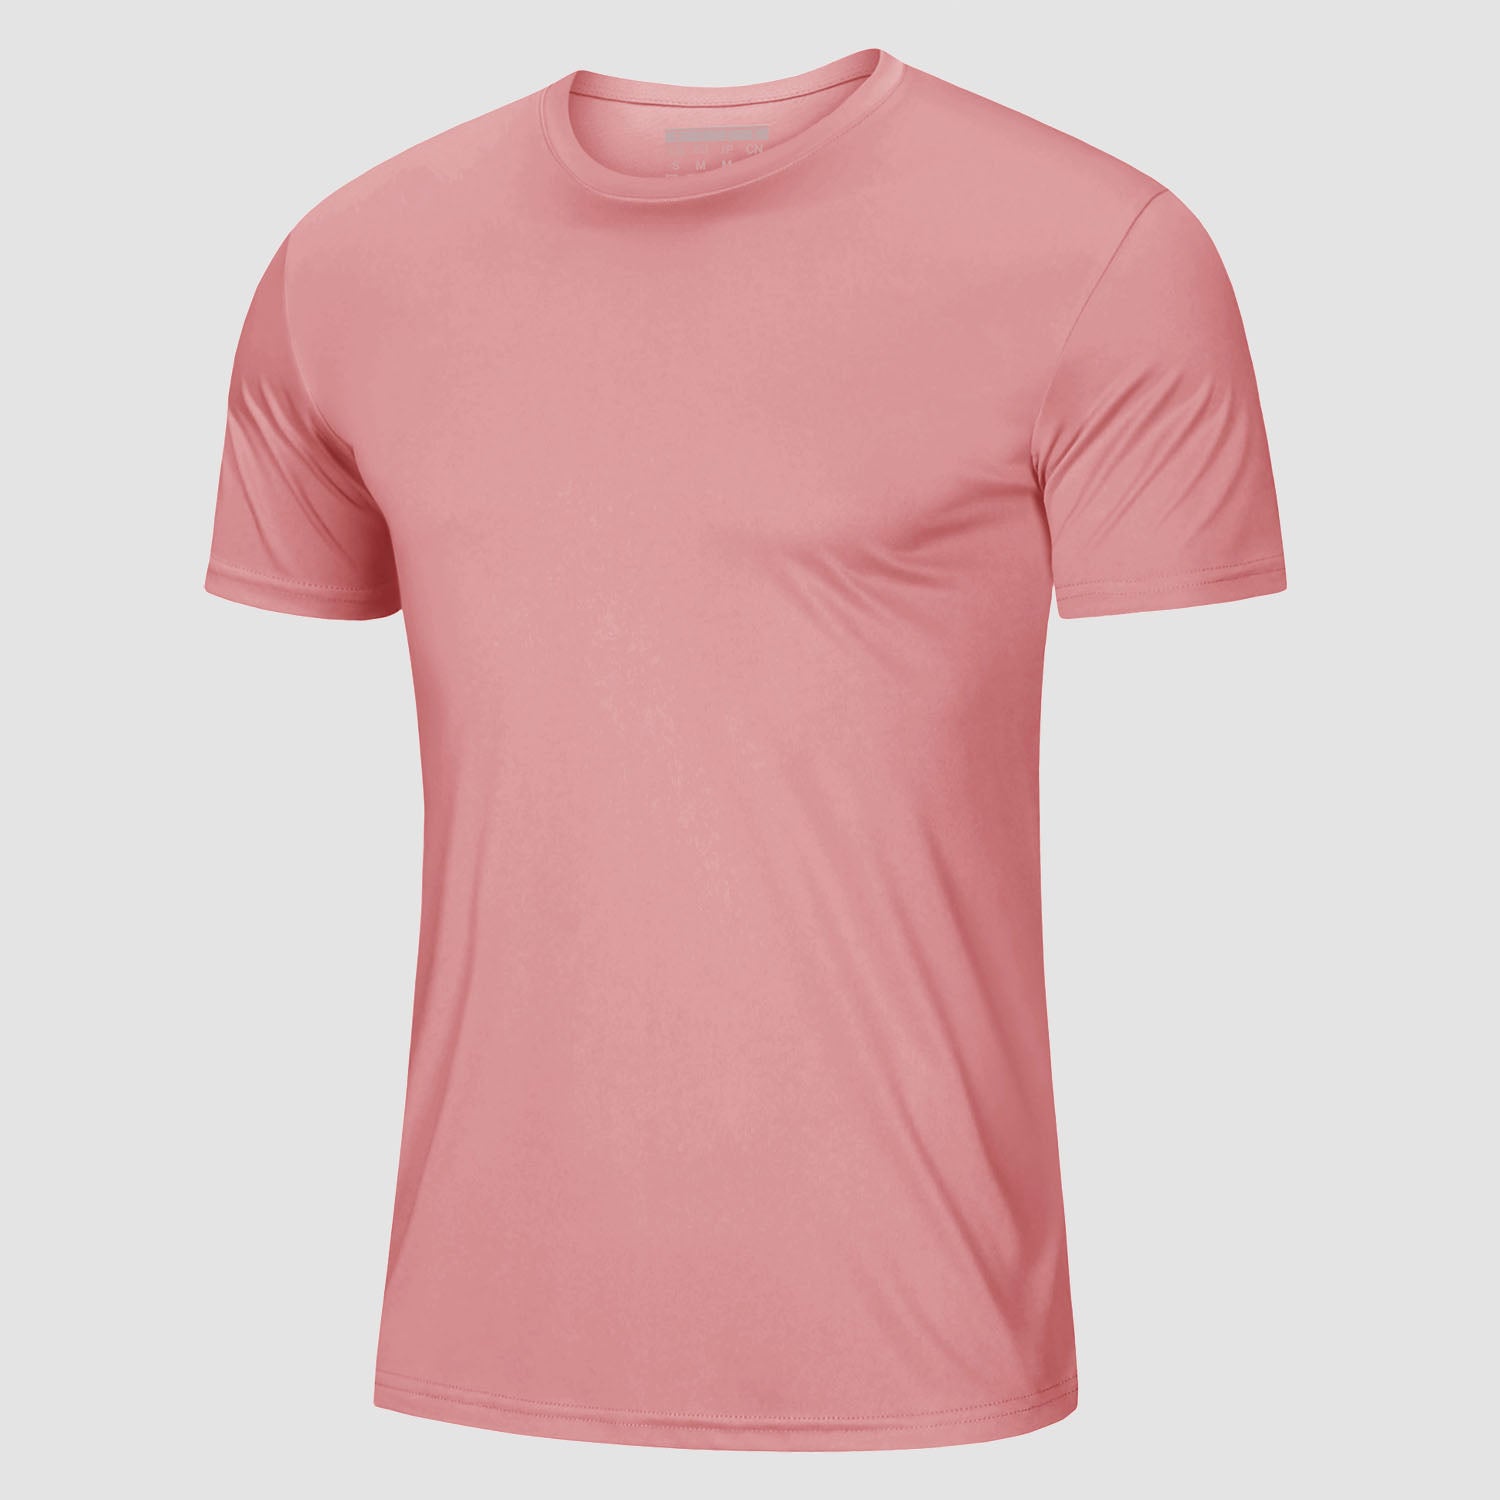 MAGCOMSEN Men's Short Sleeve T-Shirt Quick Dry UPF 50+ Athletic Running  Workout Fishing Top Tee Performance Shirts(Black) - Magcomsen